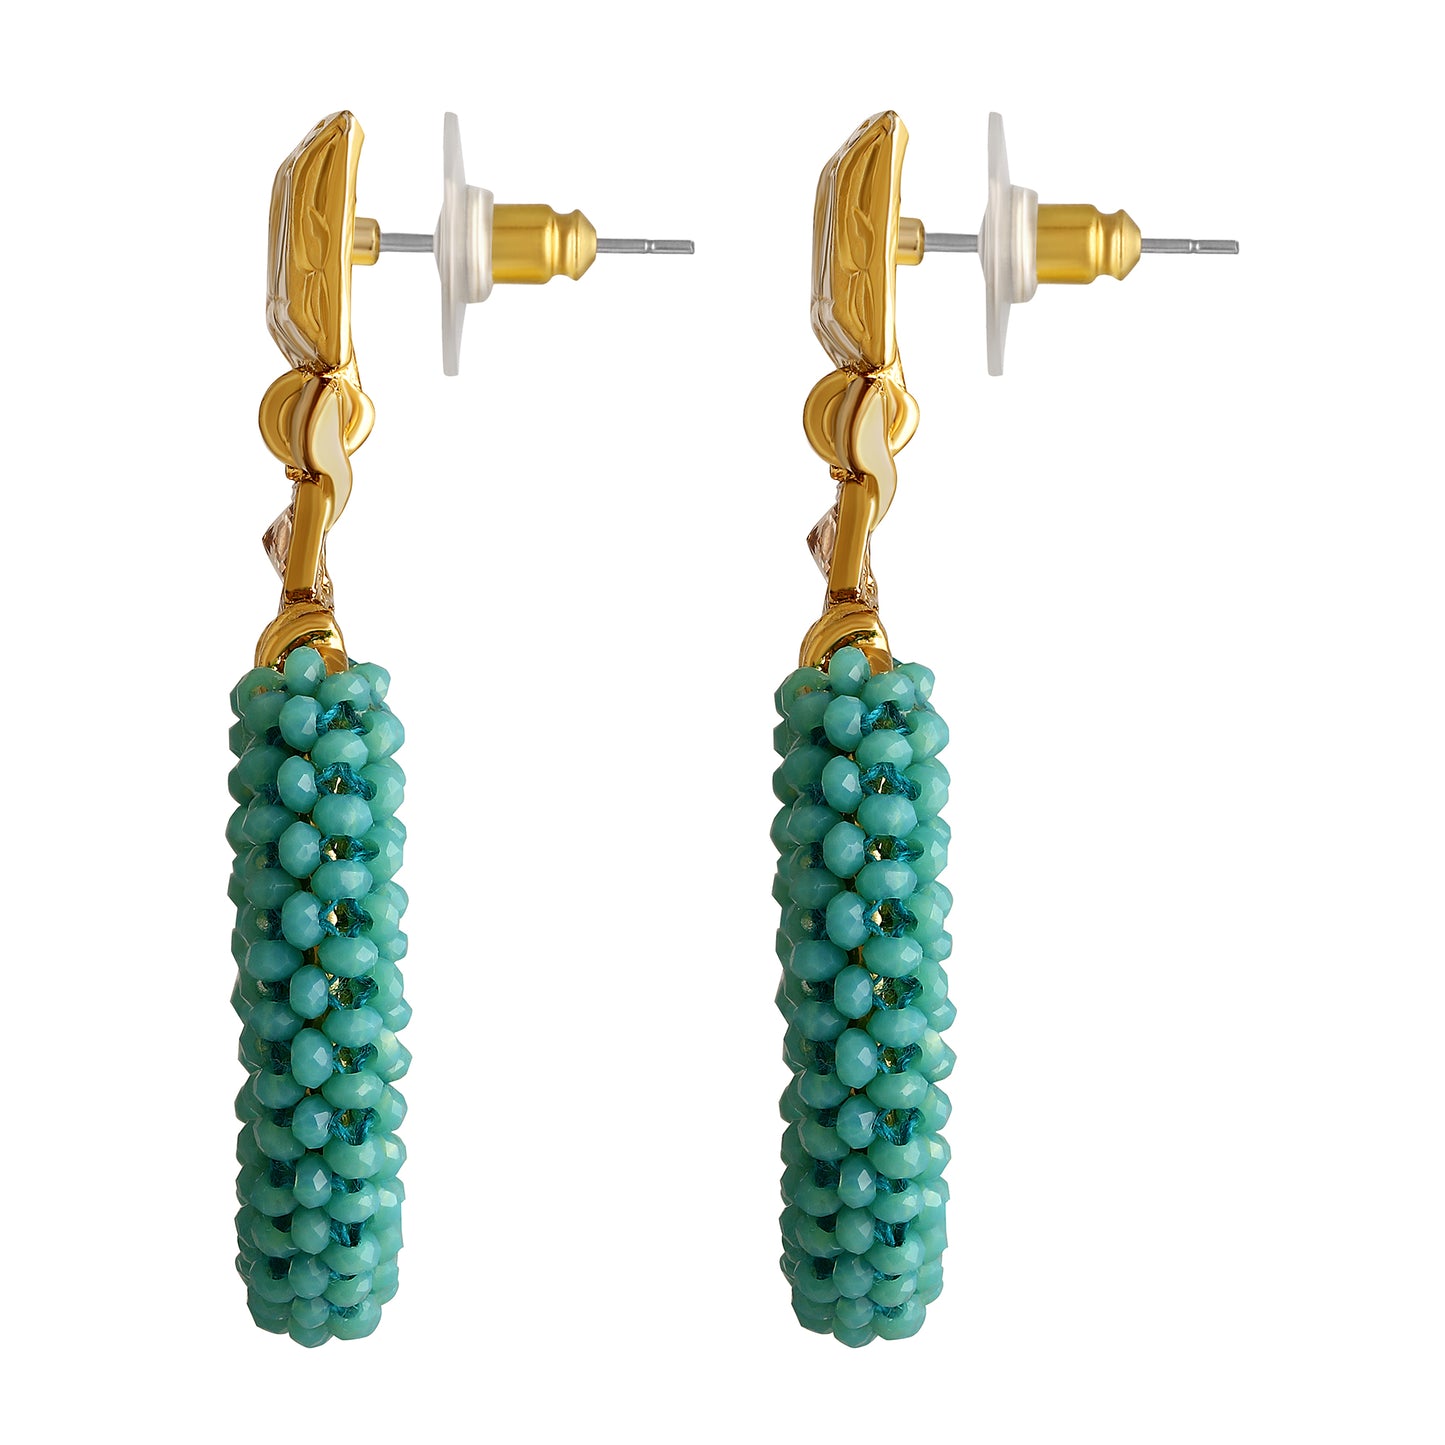 Bdiva 18K Gold Plated Kundan Turquoise Beads Earrings.